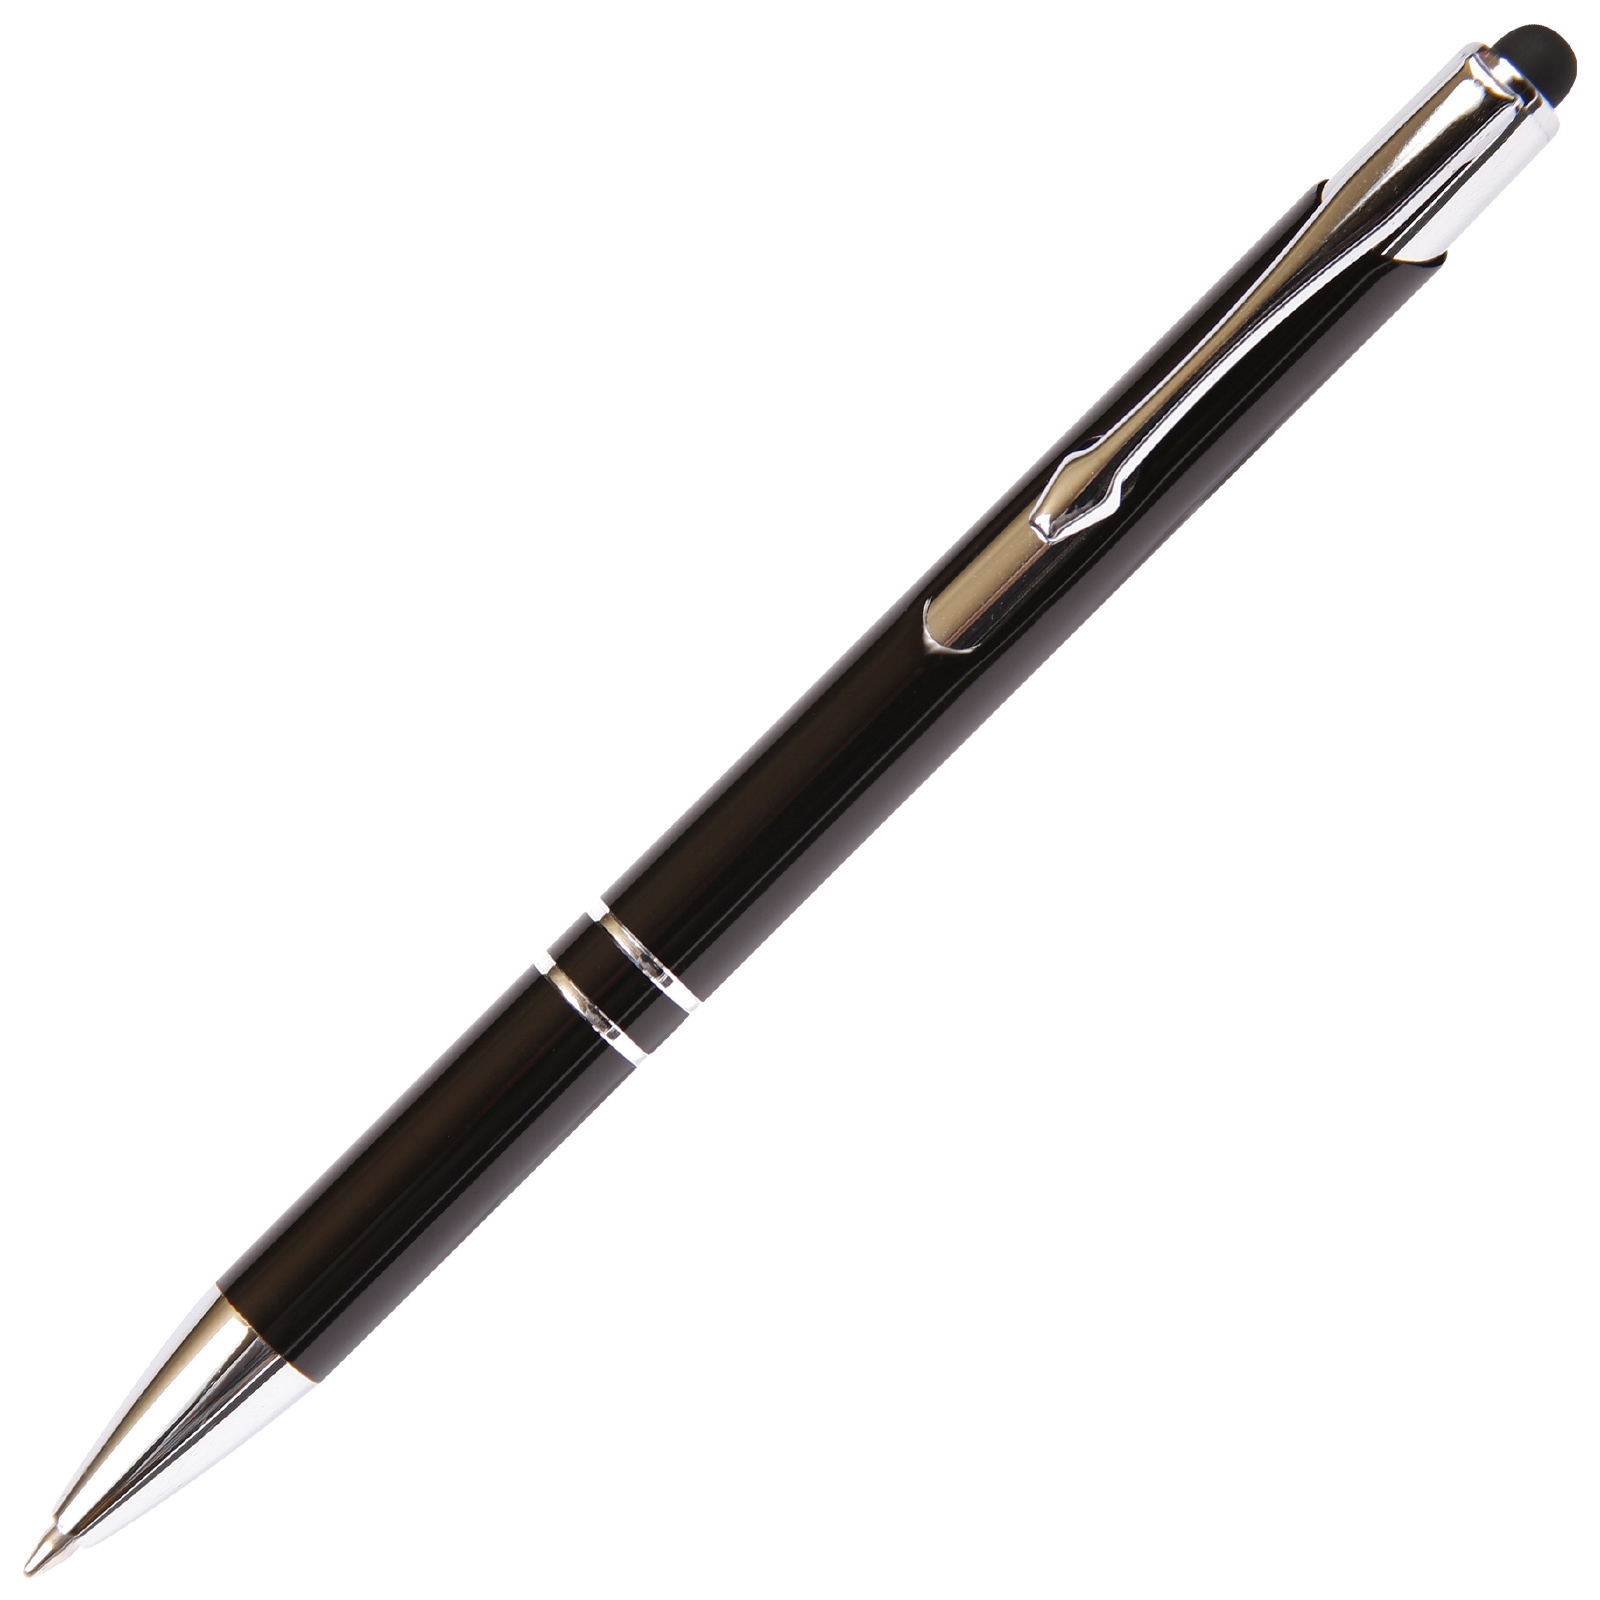 Budget Friendly Stylus JJ Ballpoint Pen - Black with Medium Tip Point By Lanier Pens